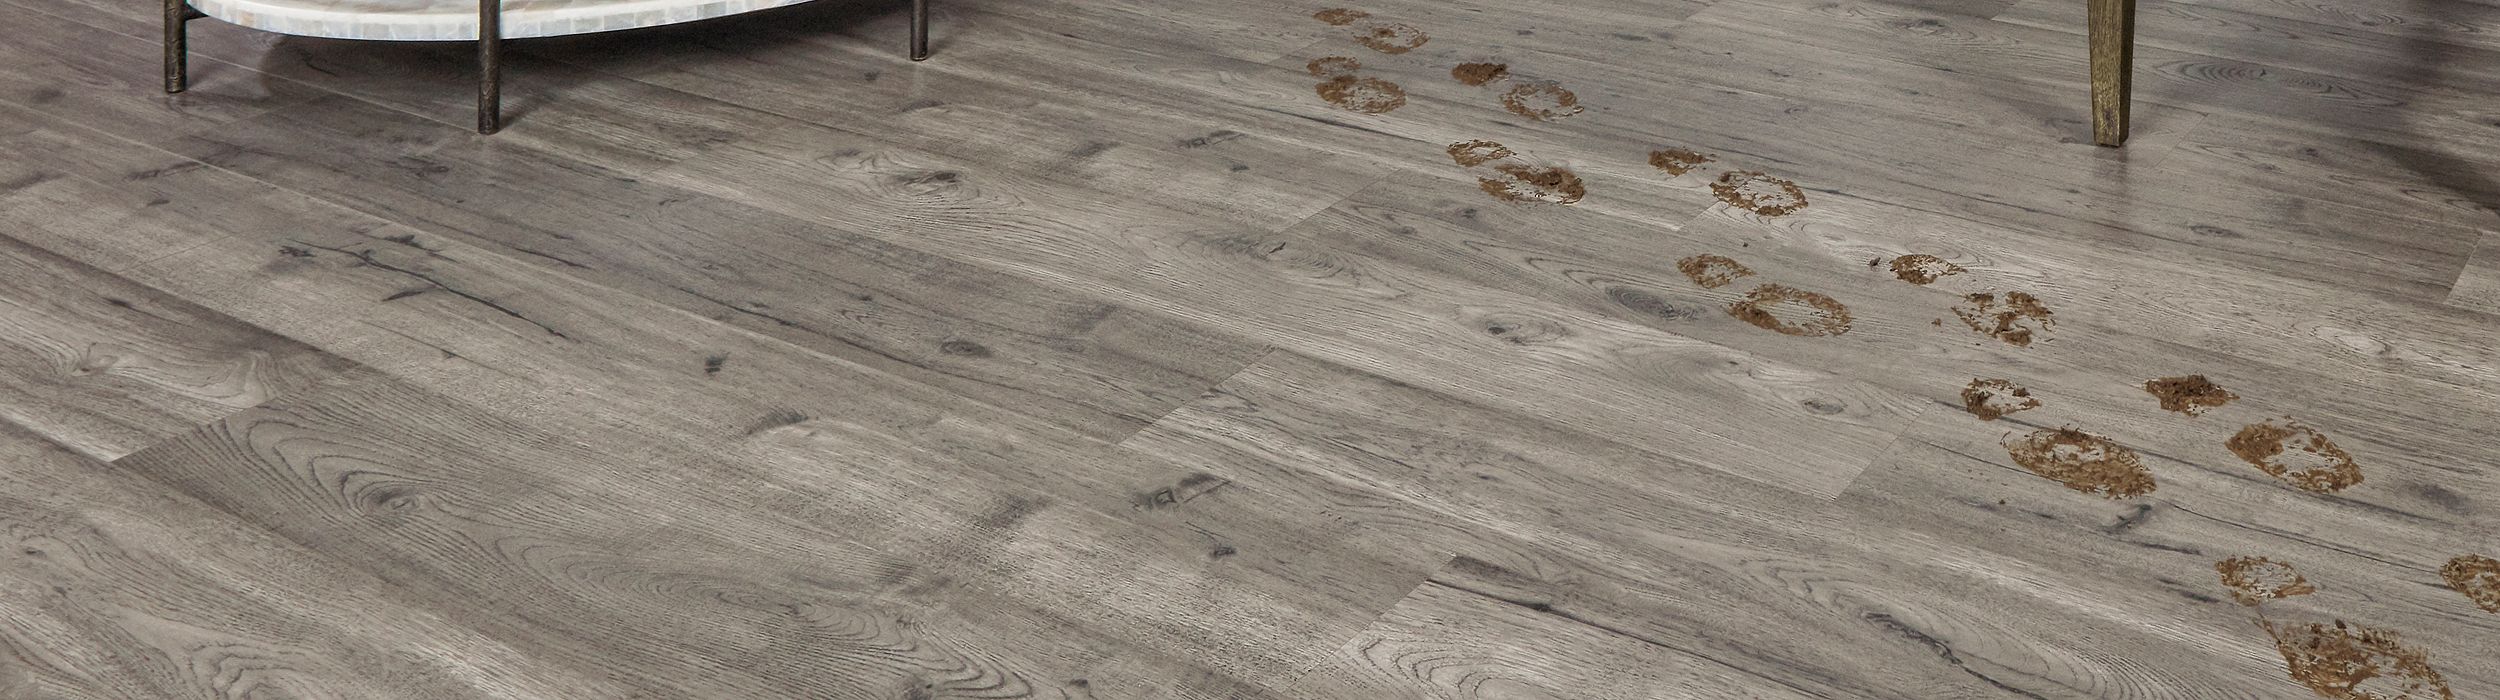 light grey pergo laminate floors with muddy footprints